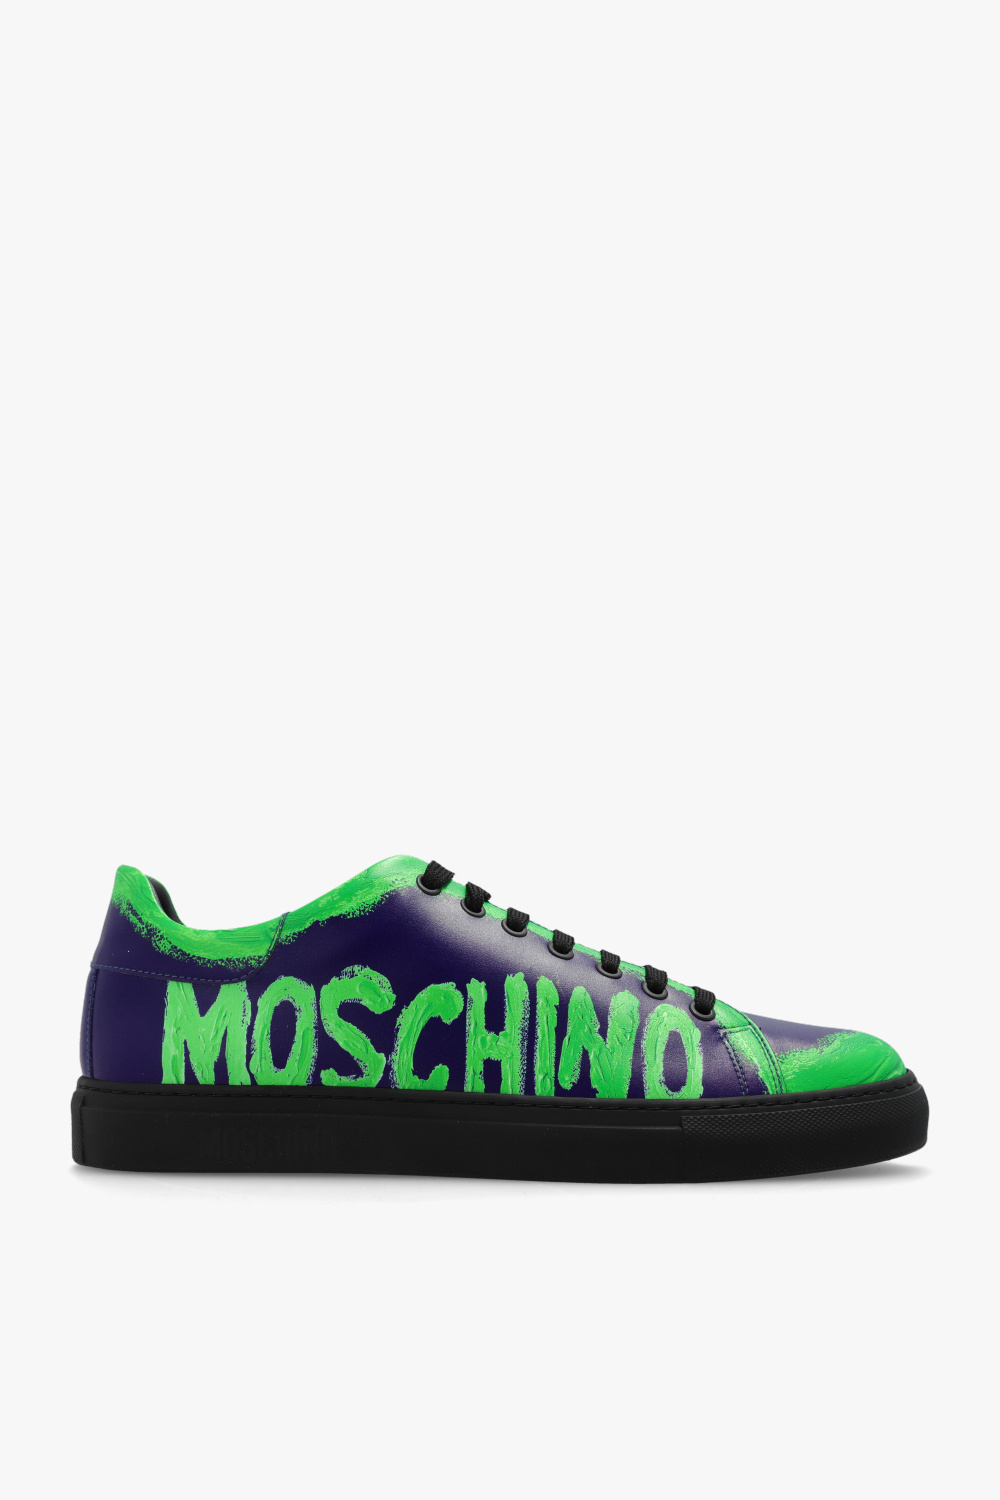 Neon Sneakers with logo Moschino - Vitkac Canada